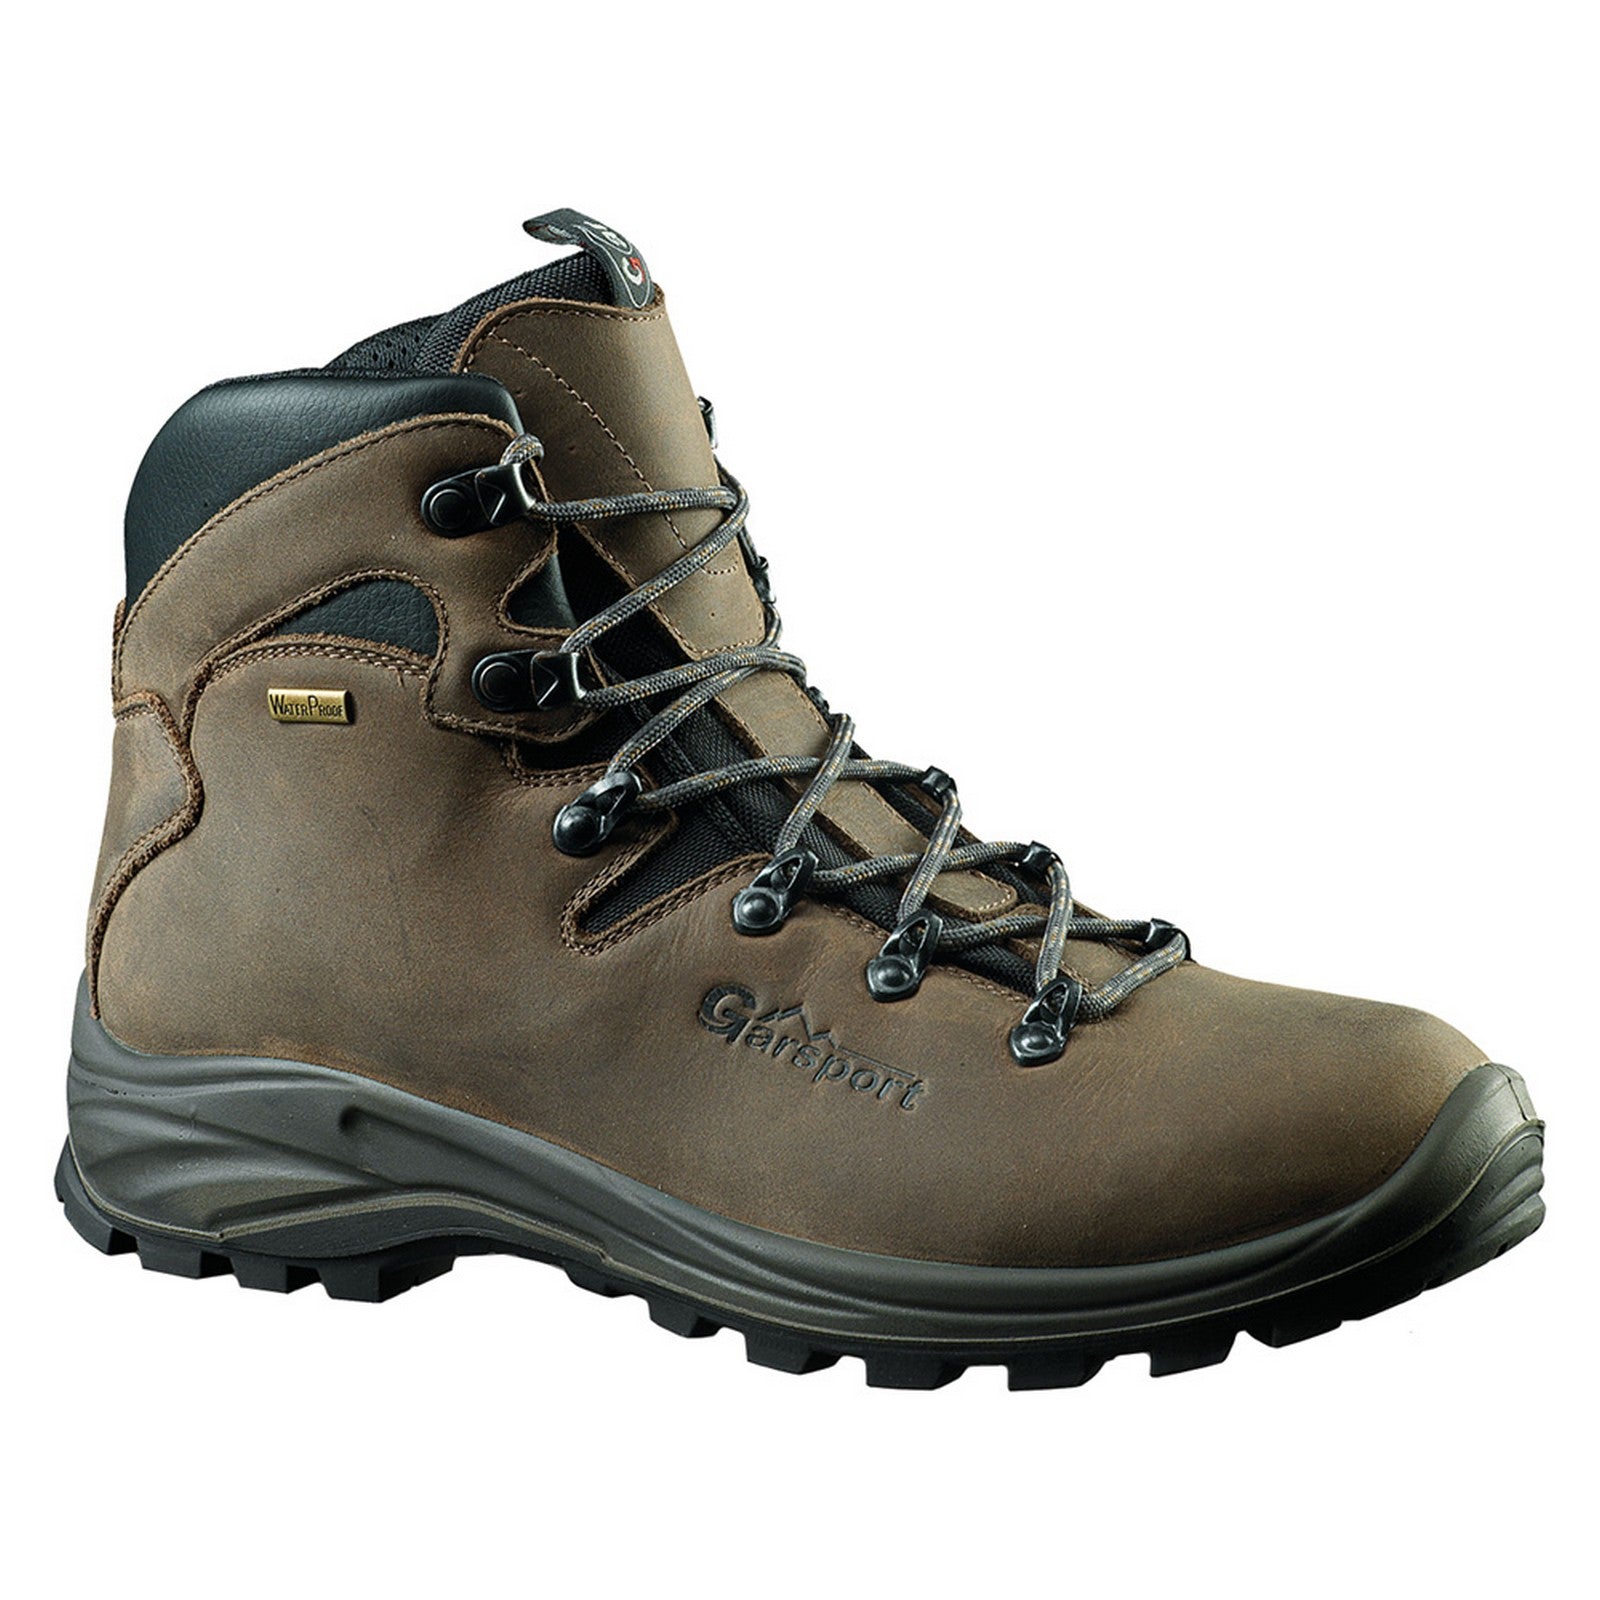 1coppia scarpe per trekking alte 'stelvio tex' n. 44 - marrone cod:ferx.1061234nlm